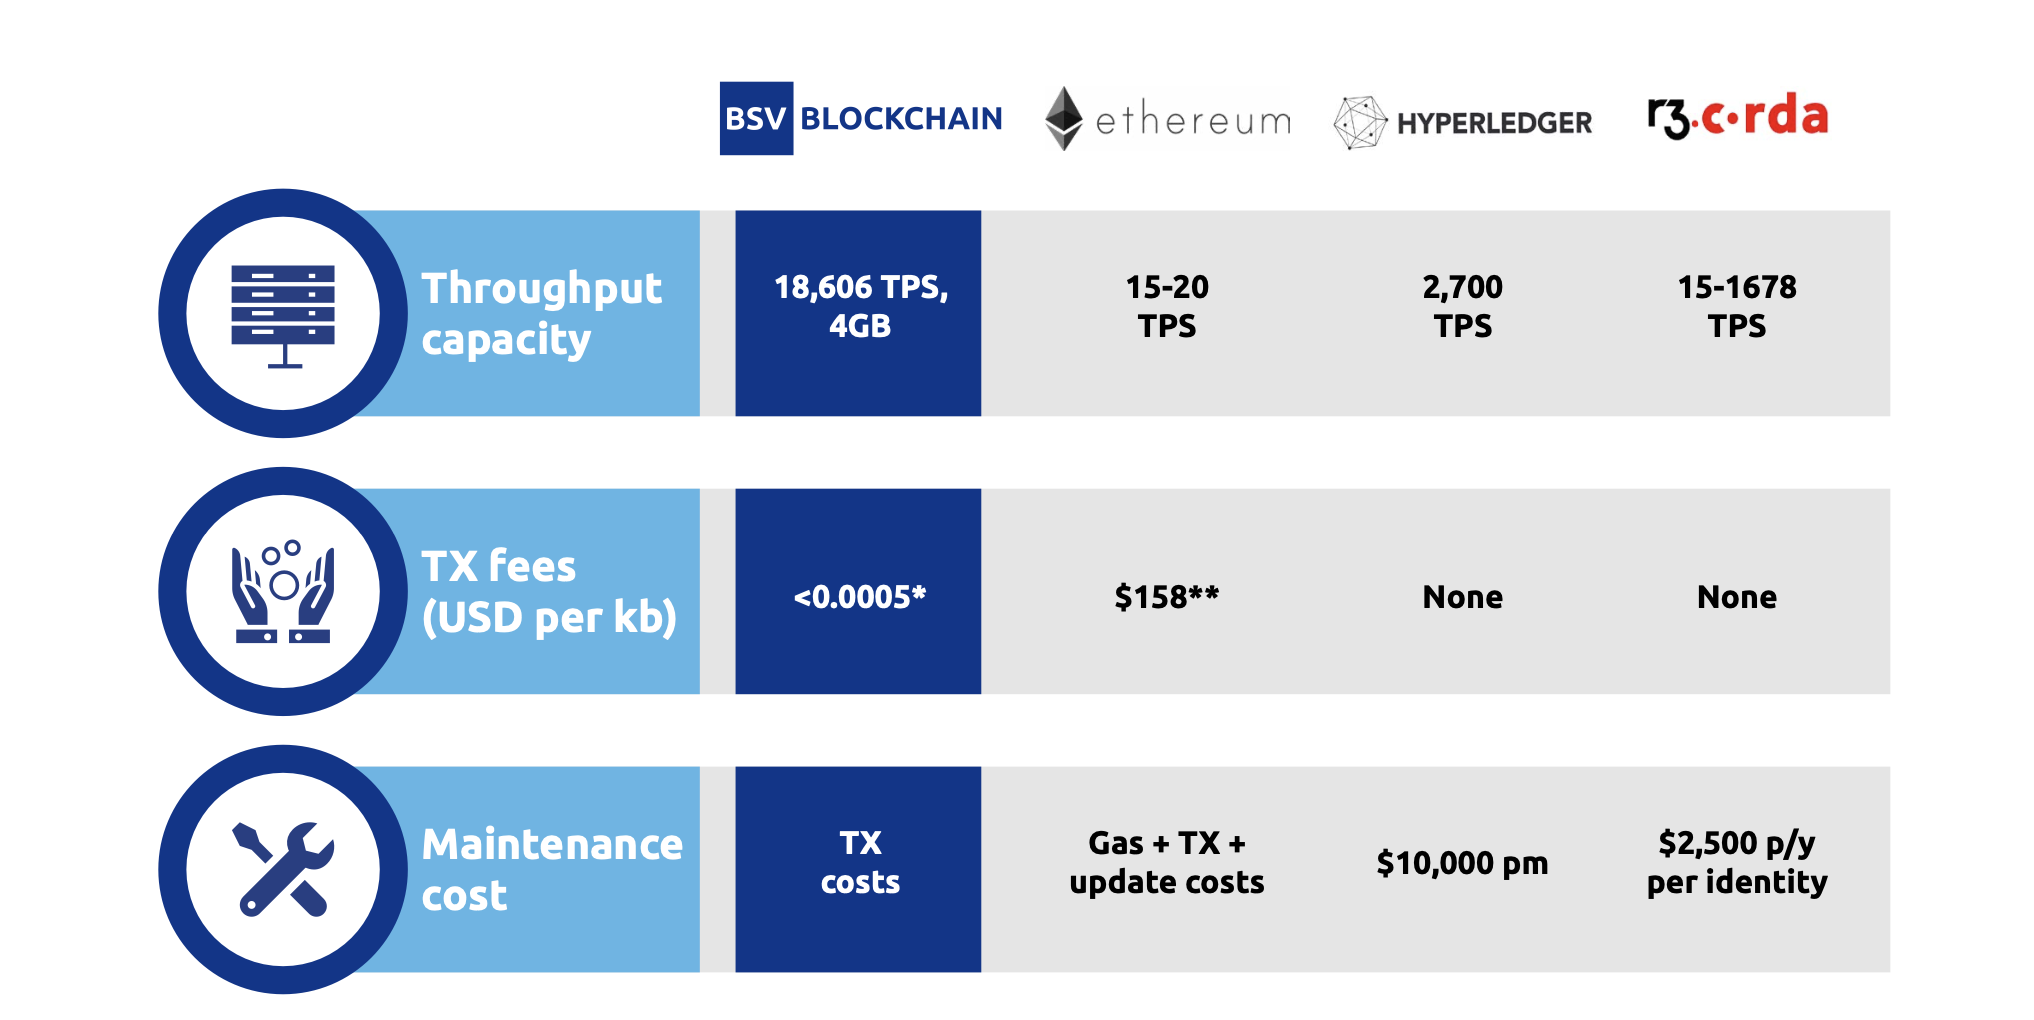 BSV Blockchain data